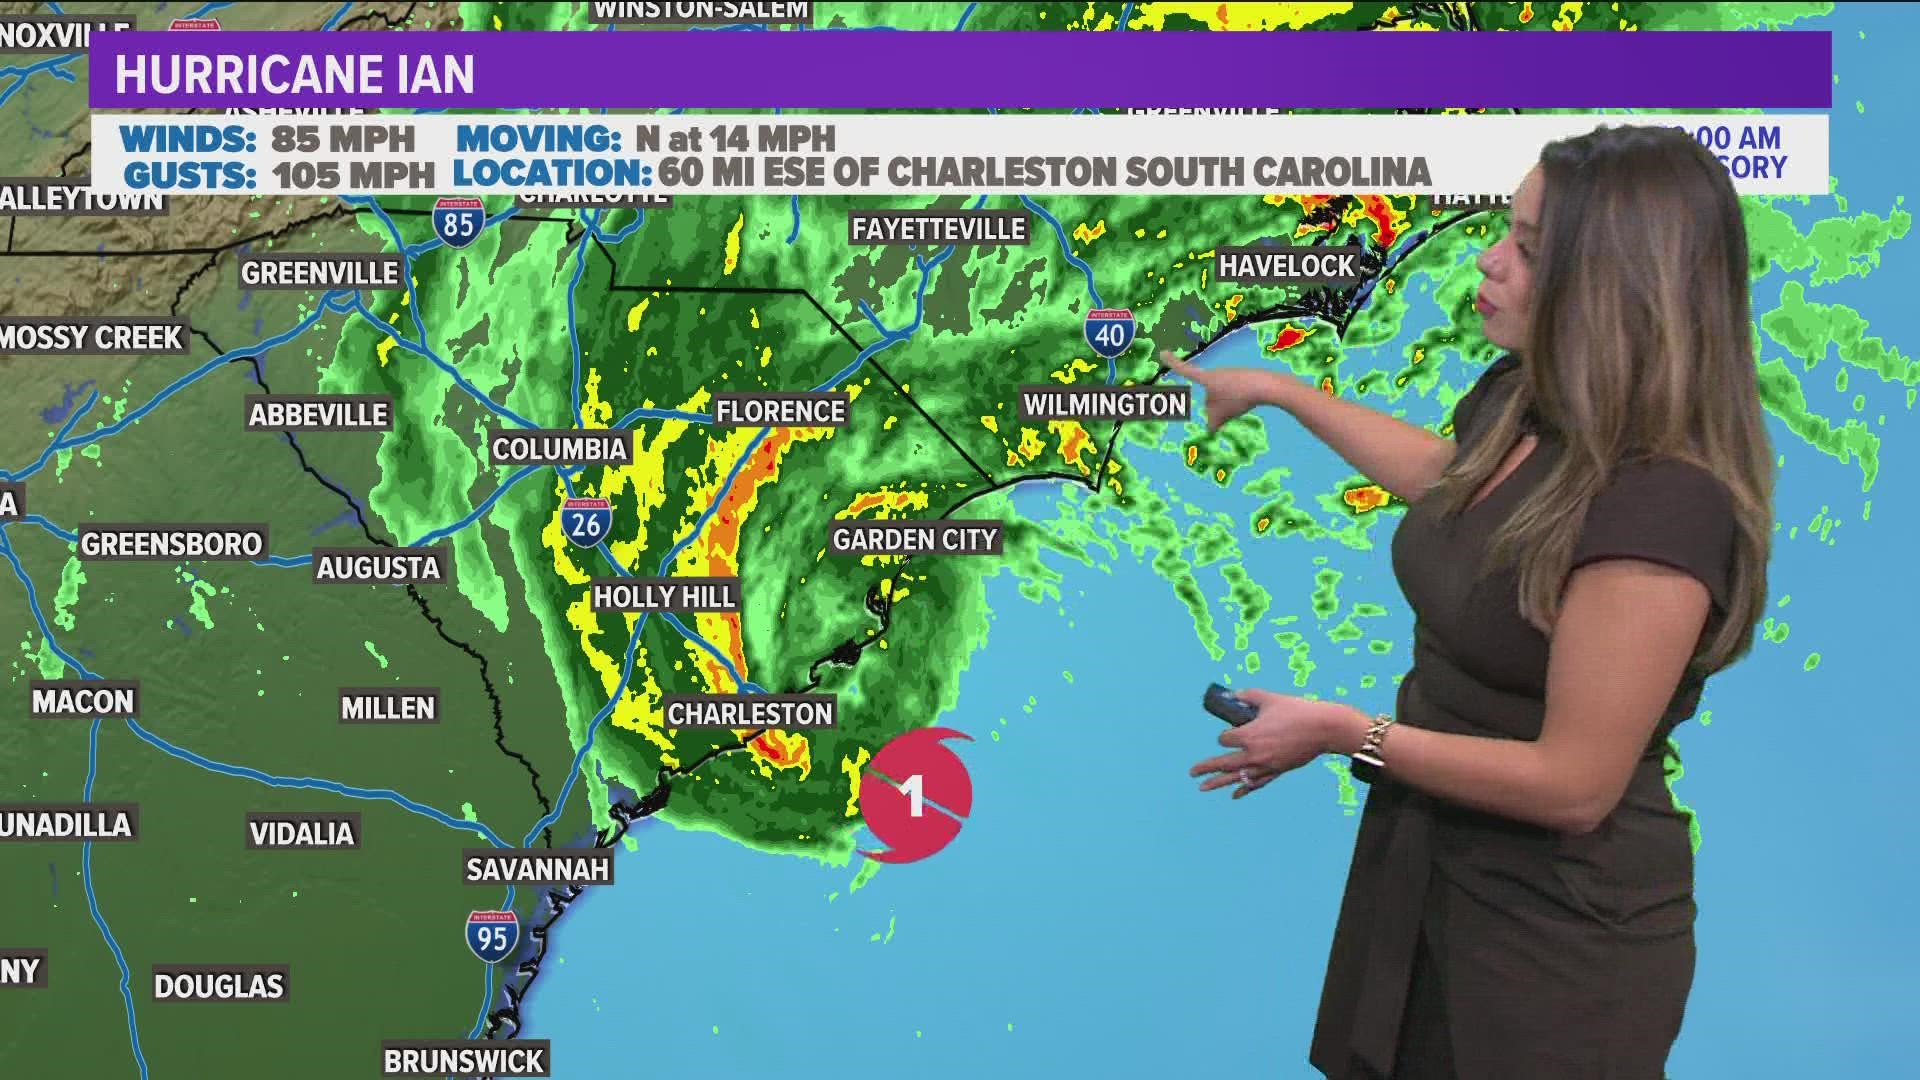 Here's the latest on Hurricane Ian as it moves near South Carolina.